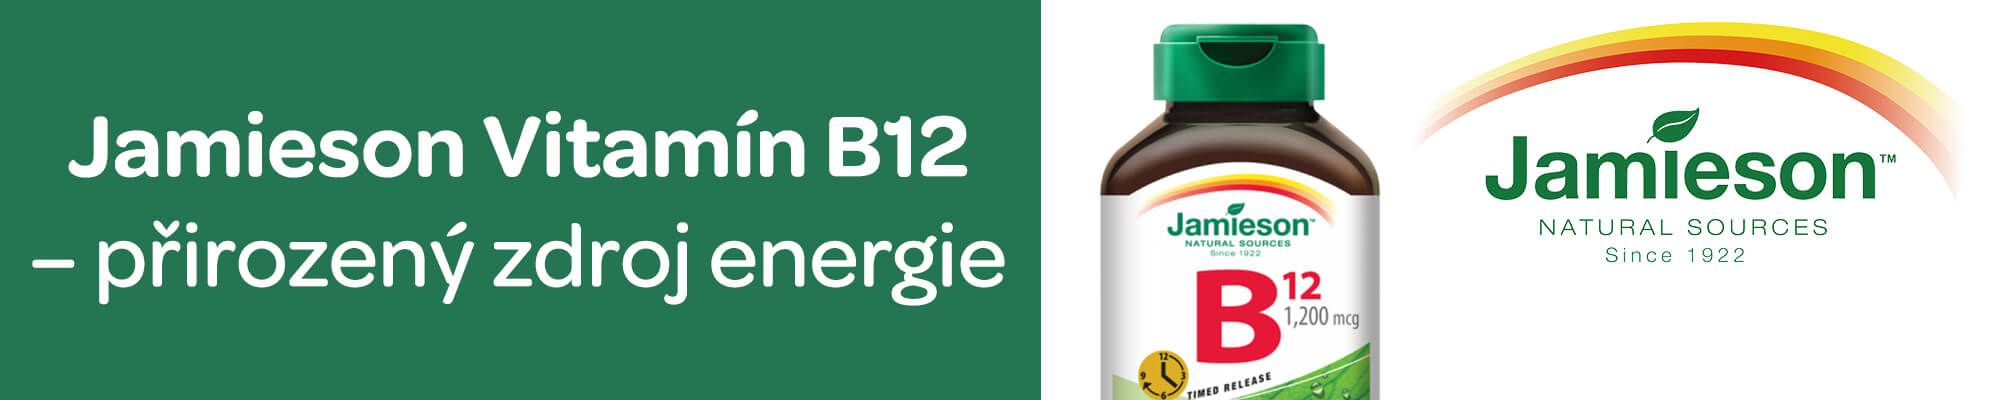 Jamieson, Vitamin B12, prirozeny zdroj energie